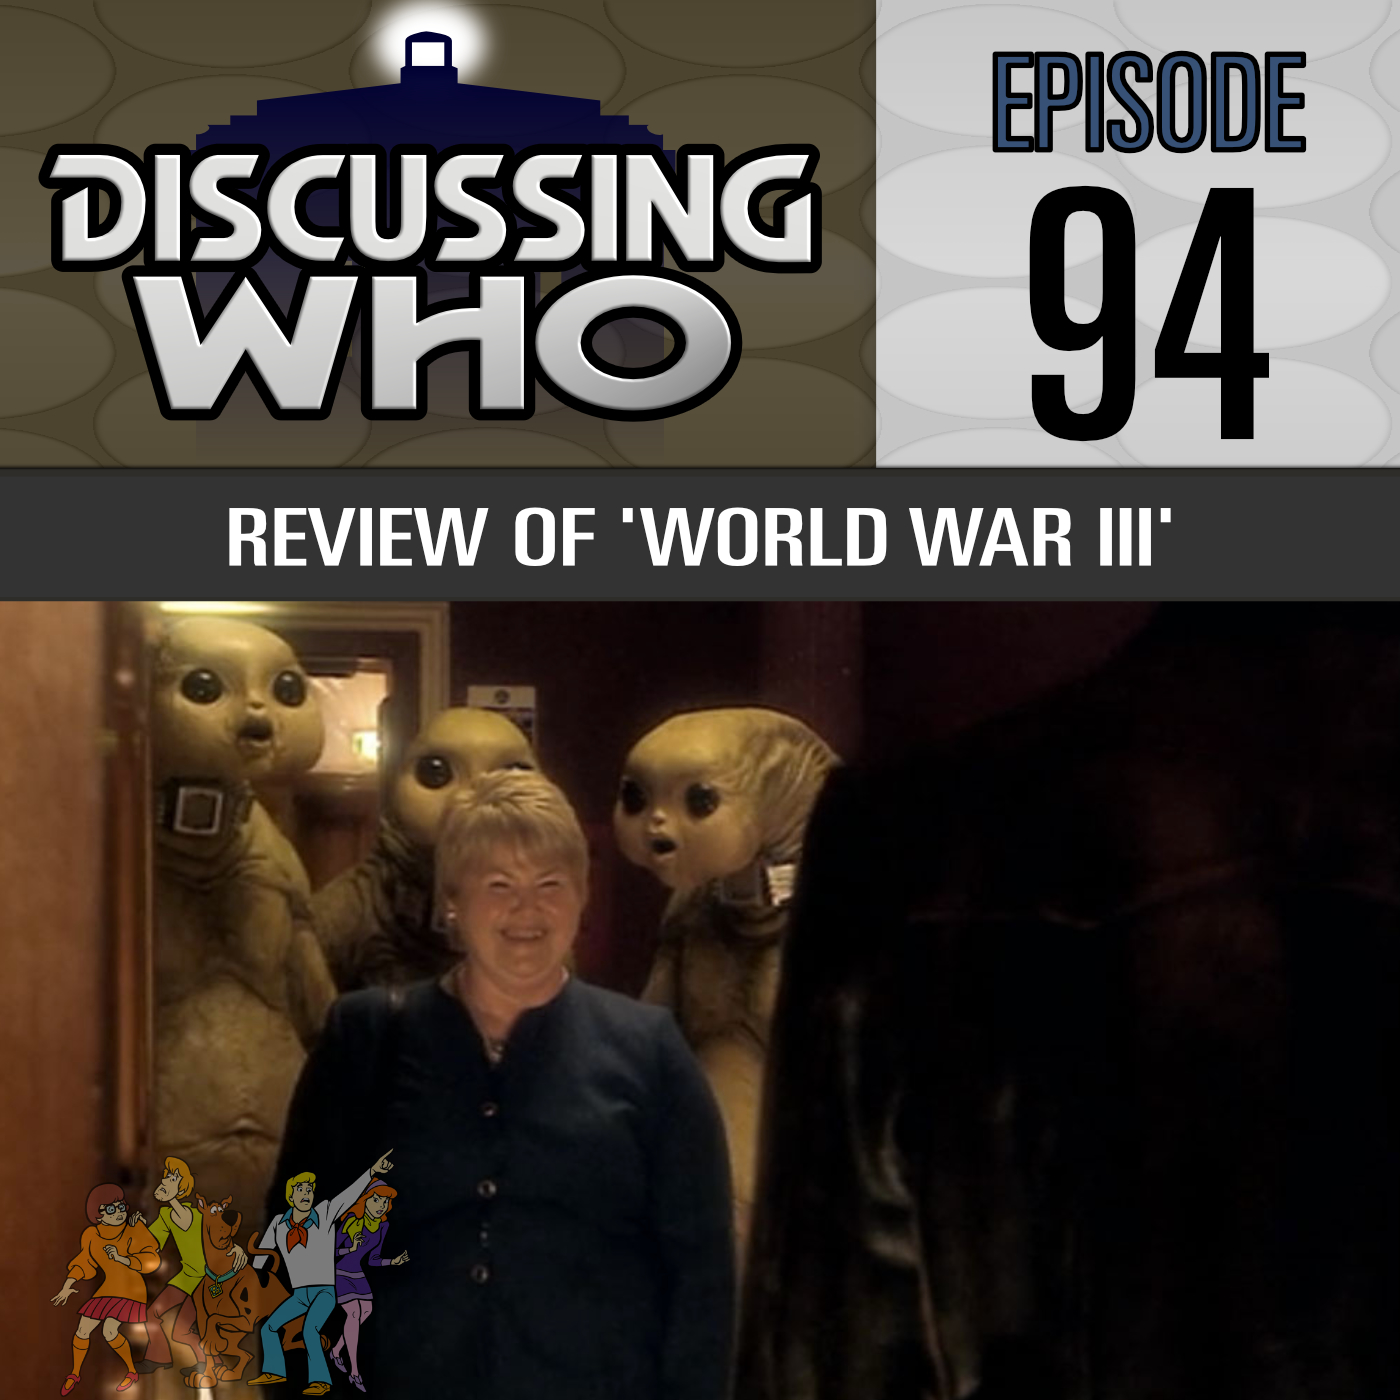 Review of World War III